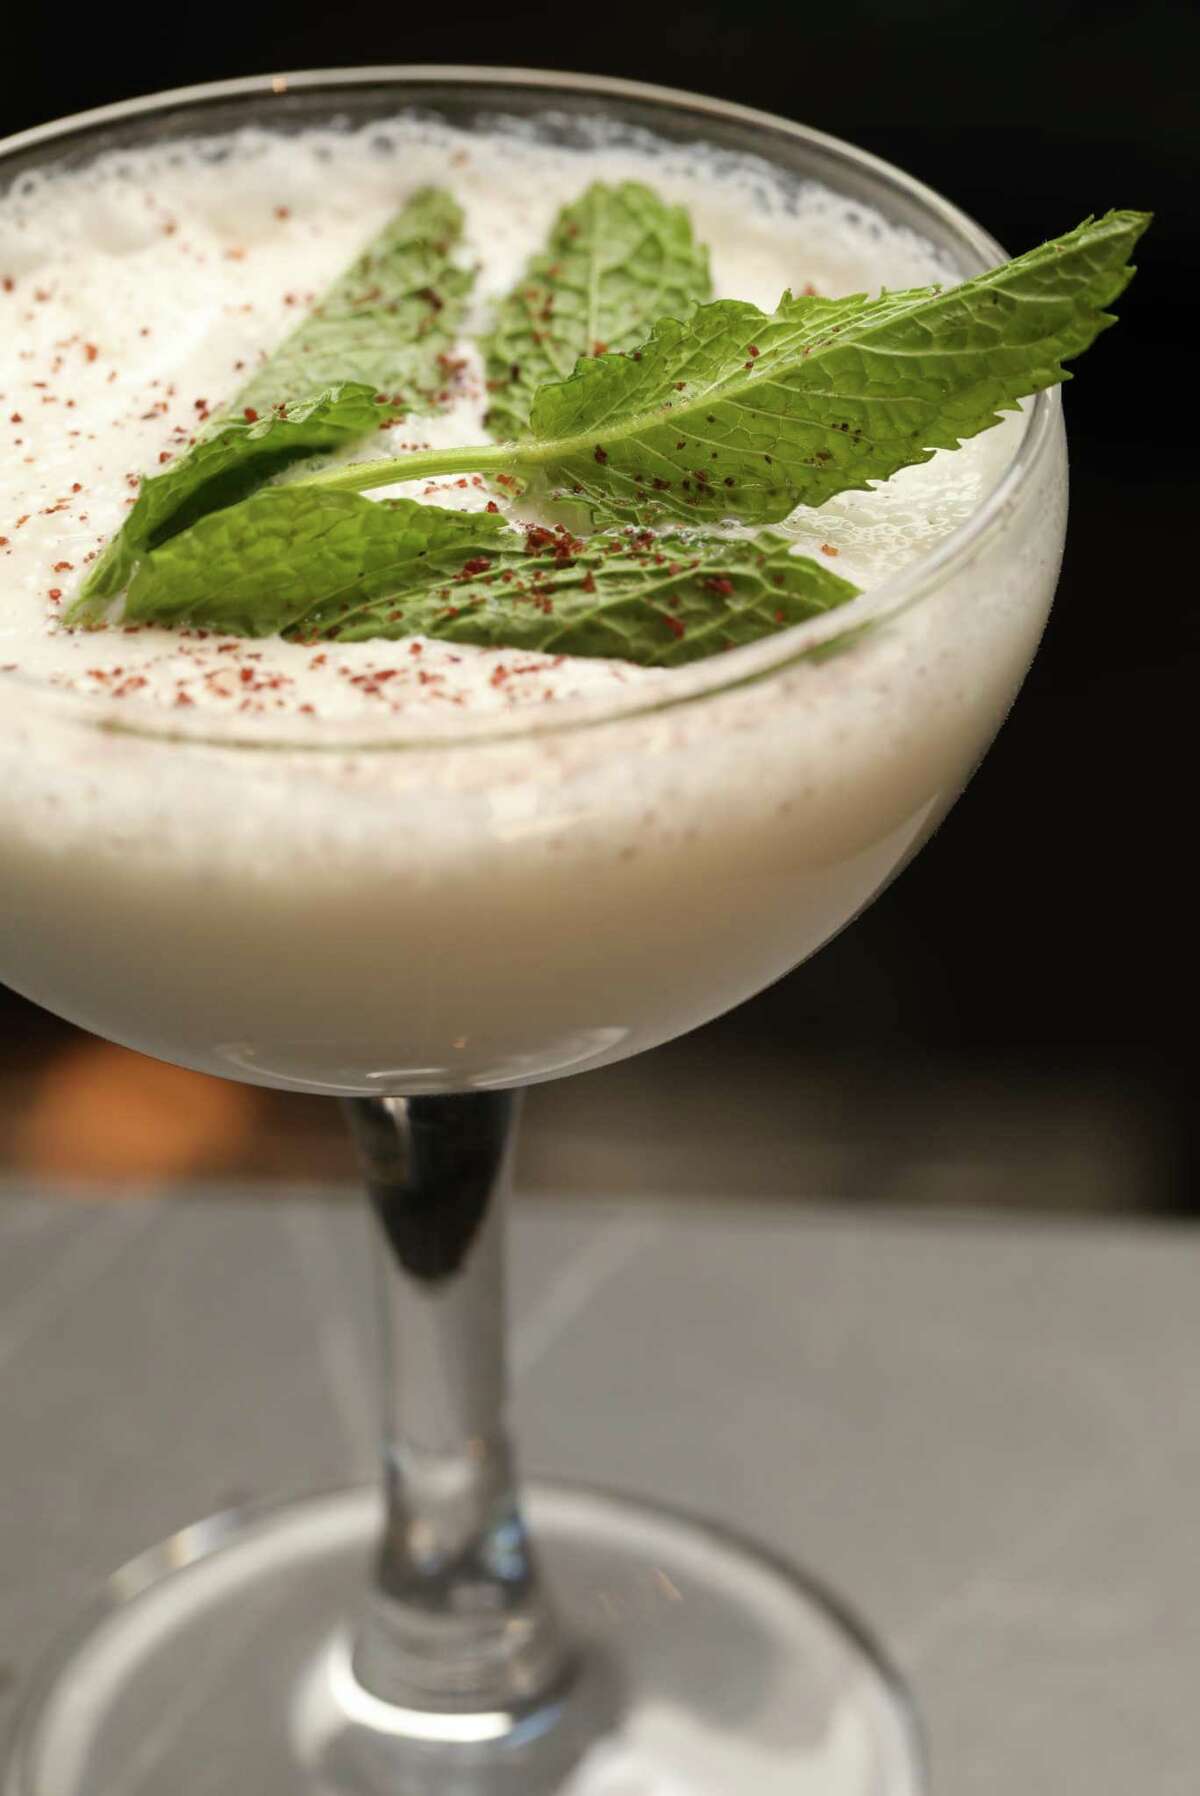 The Spice Merchant drink (vodka, sumac yogurt, lime juice, mint syrup) is part of Kitchen Door’s new cocktail program.